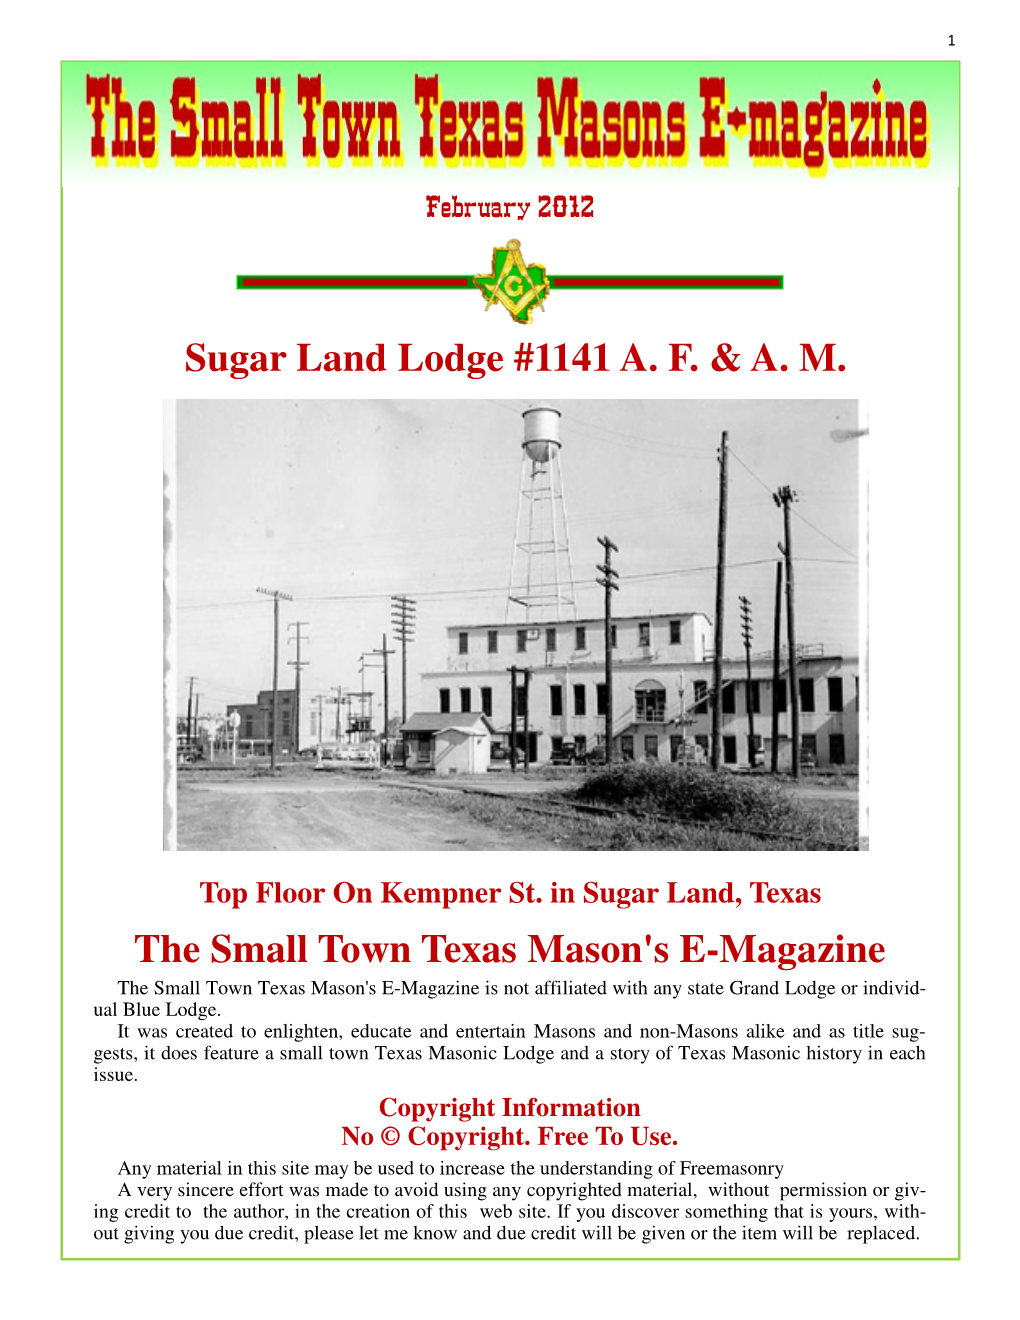 The Small Town Texas Mason's E-Magazine Sugar Land Lodge